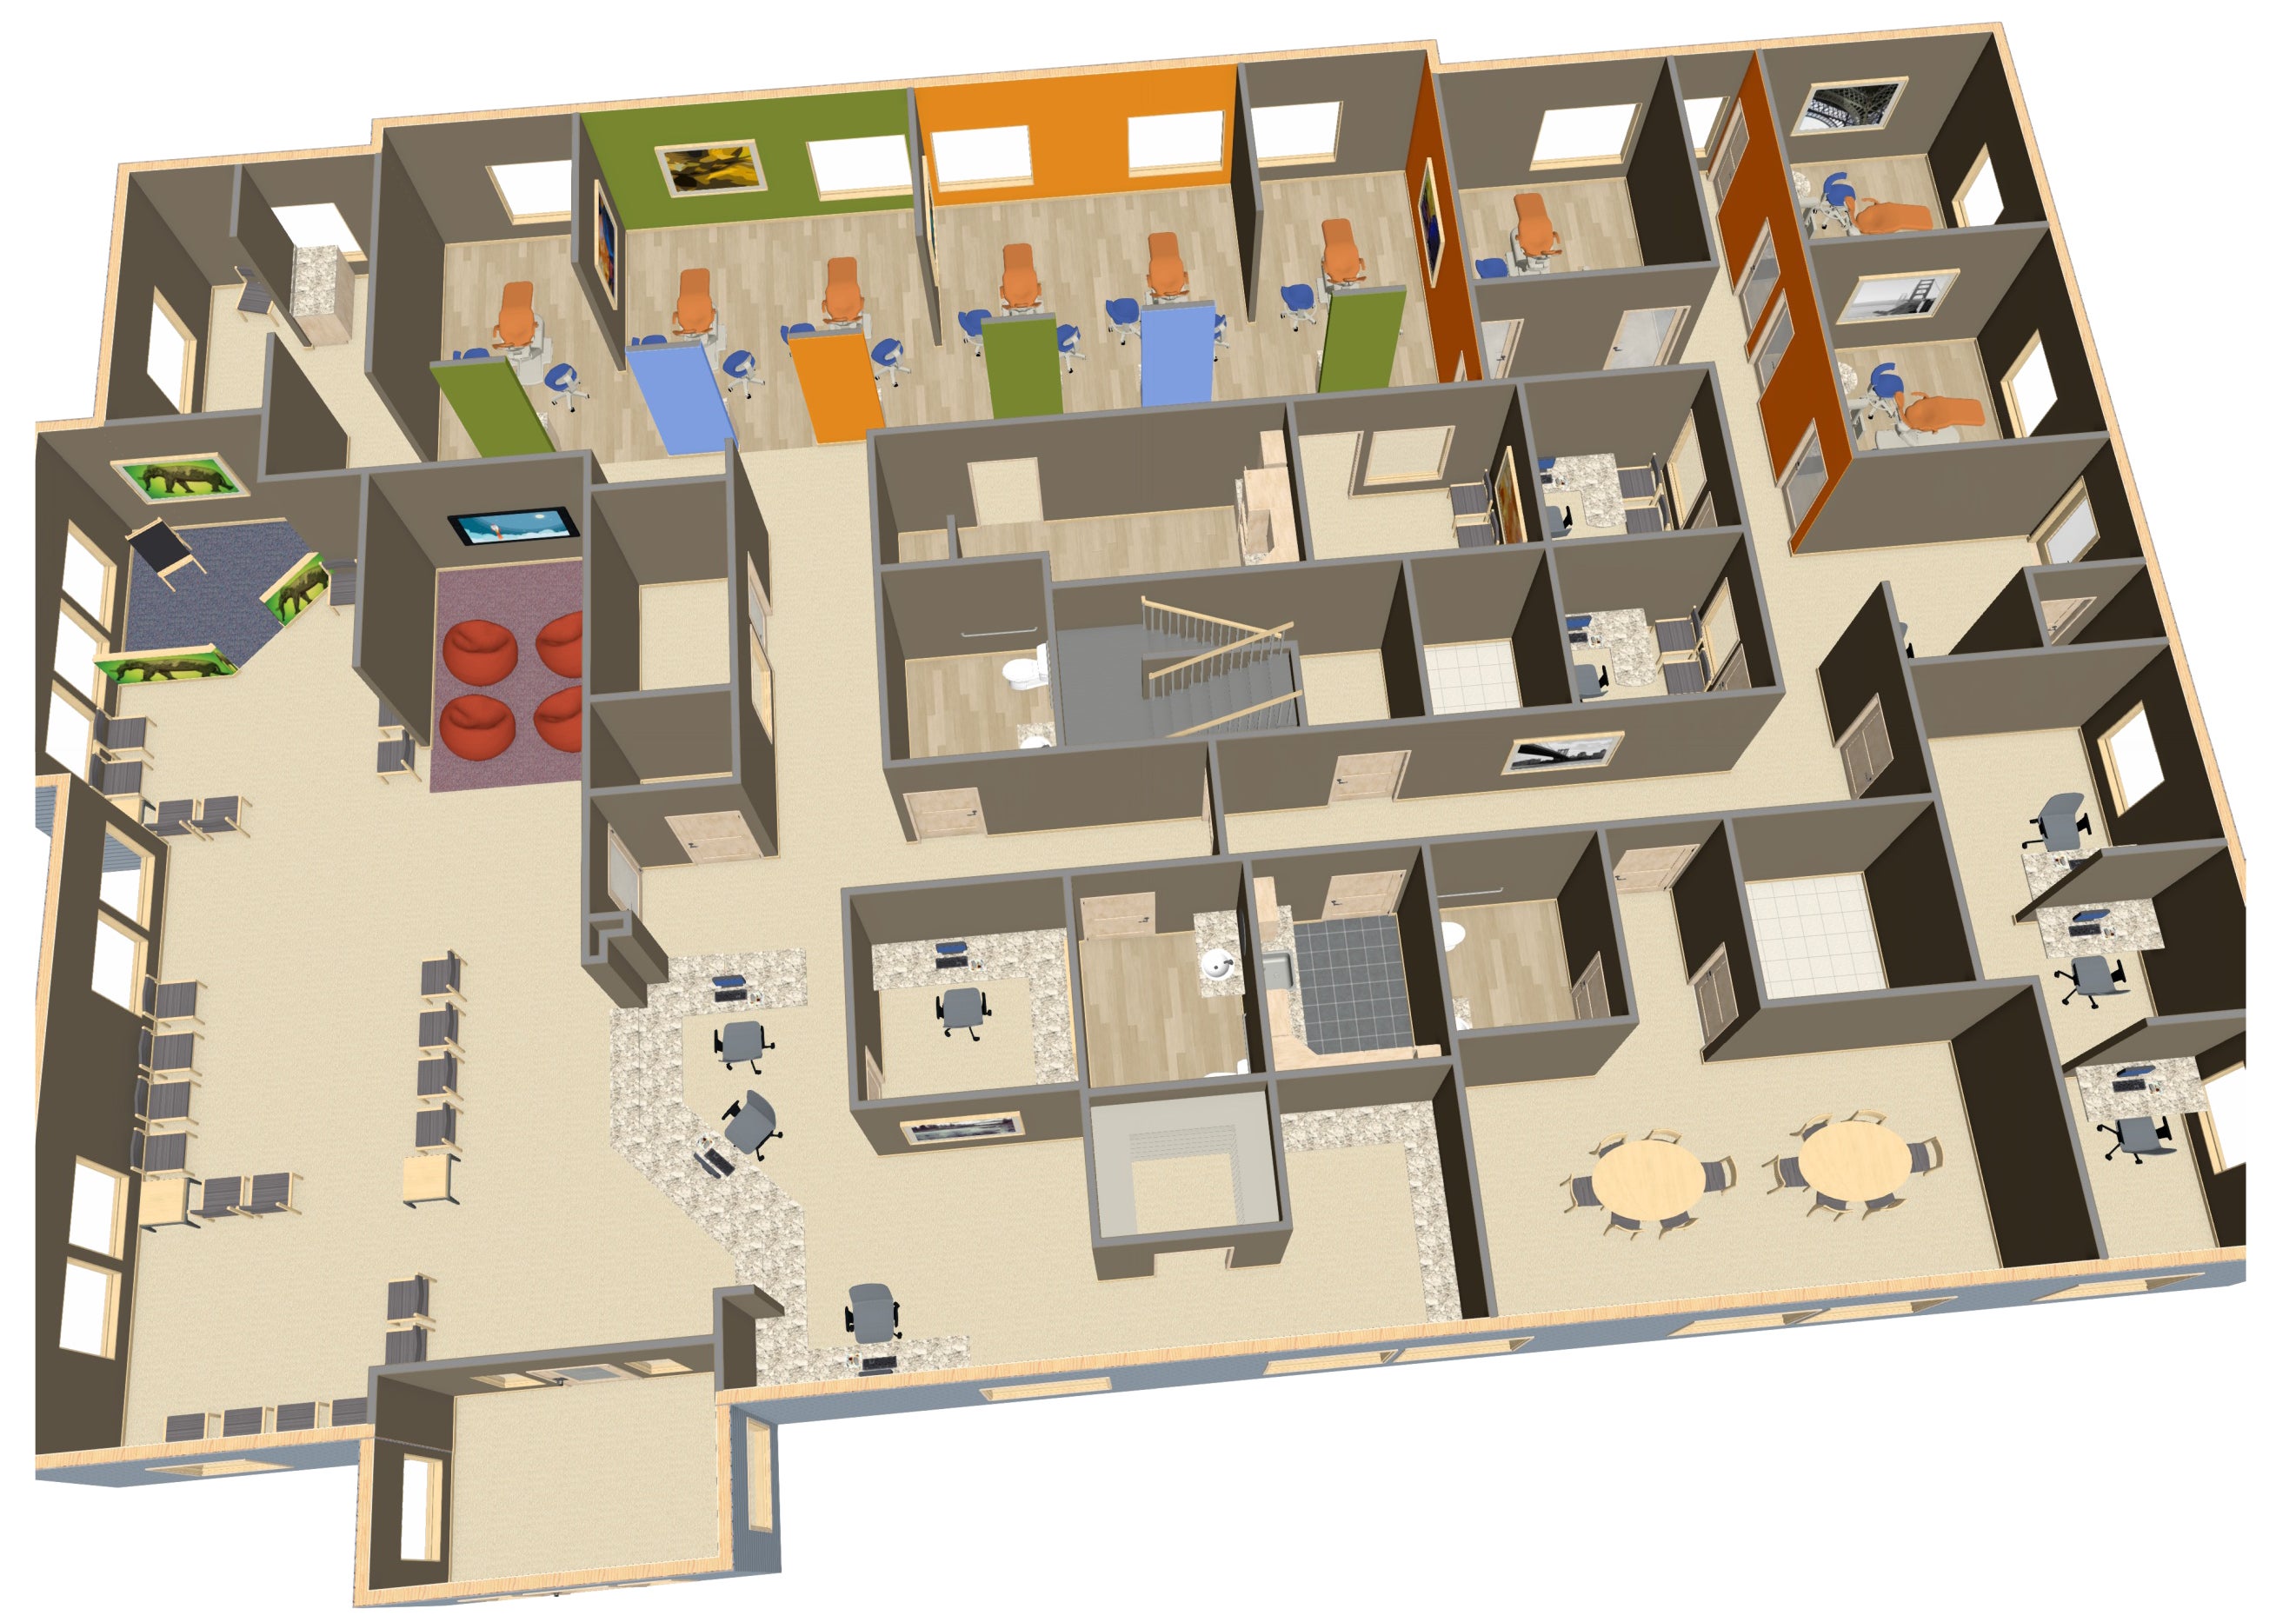 Children's Dental office planning and design – 3D Plan